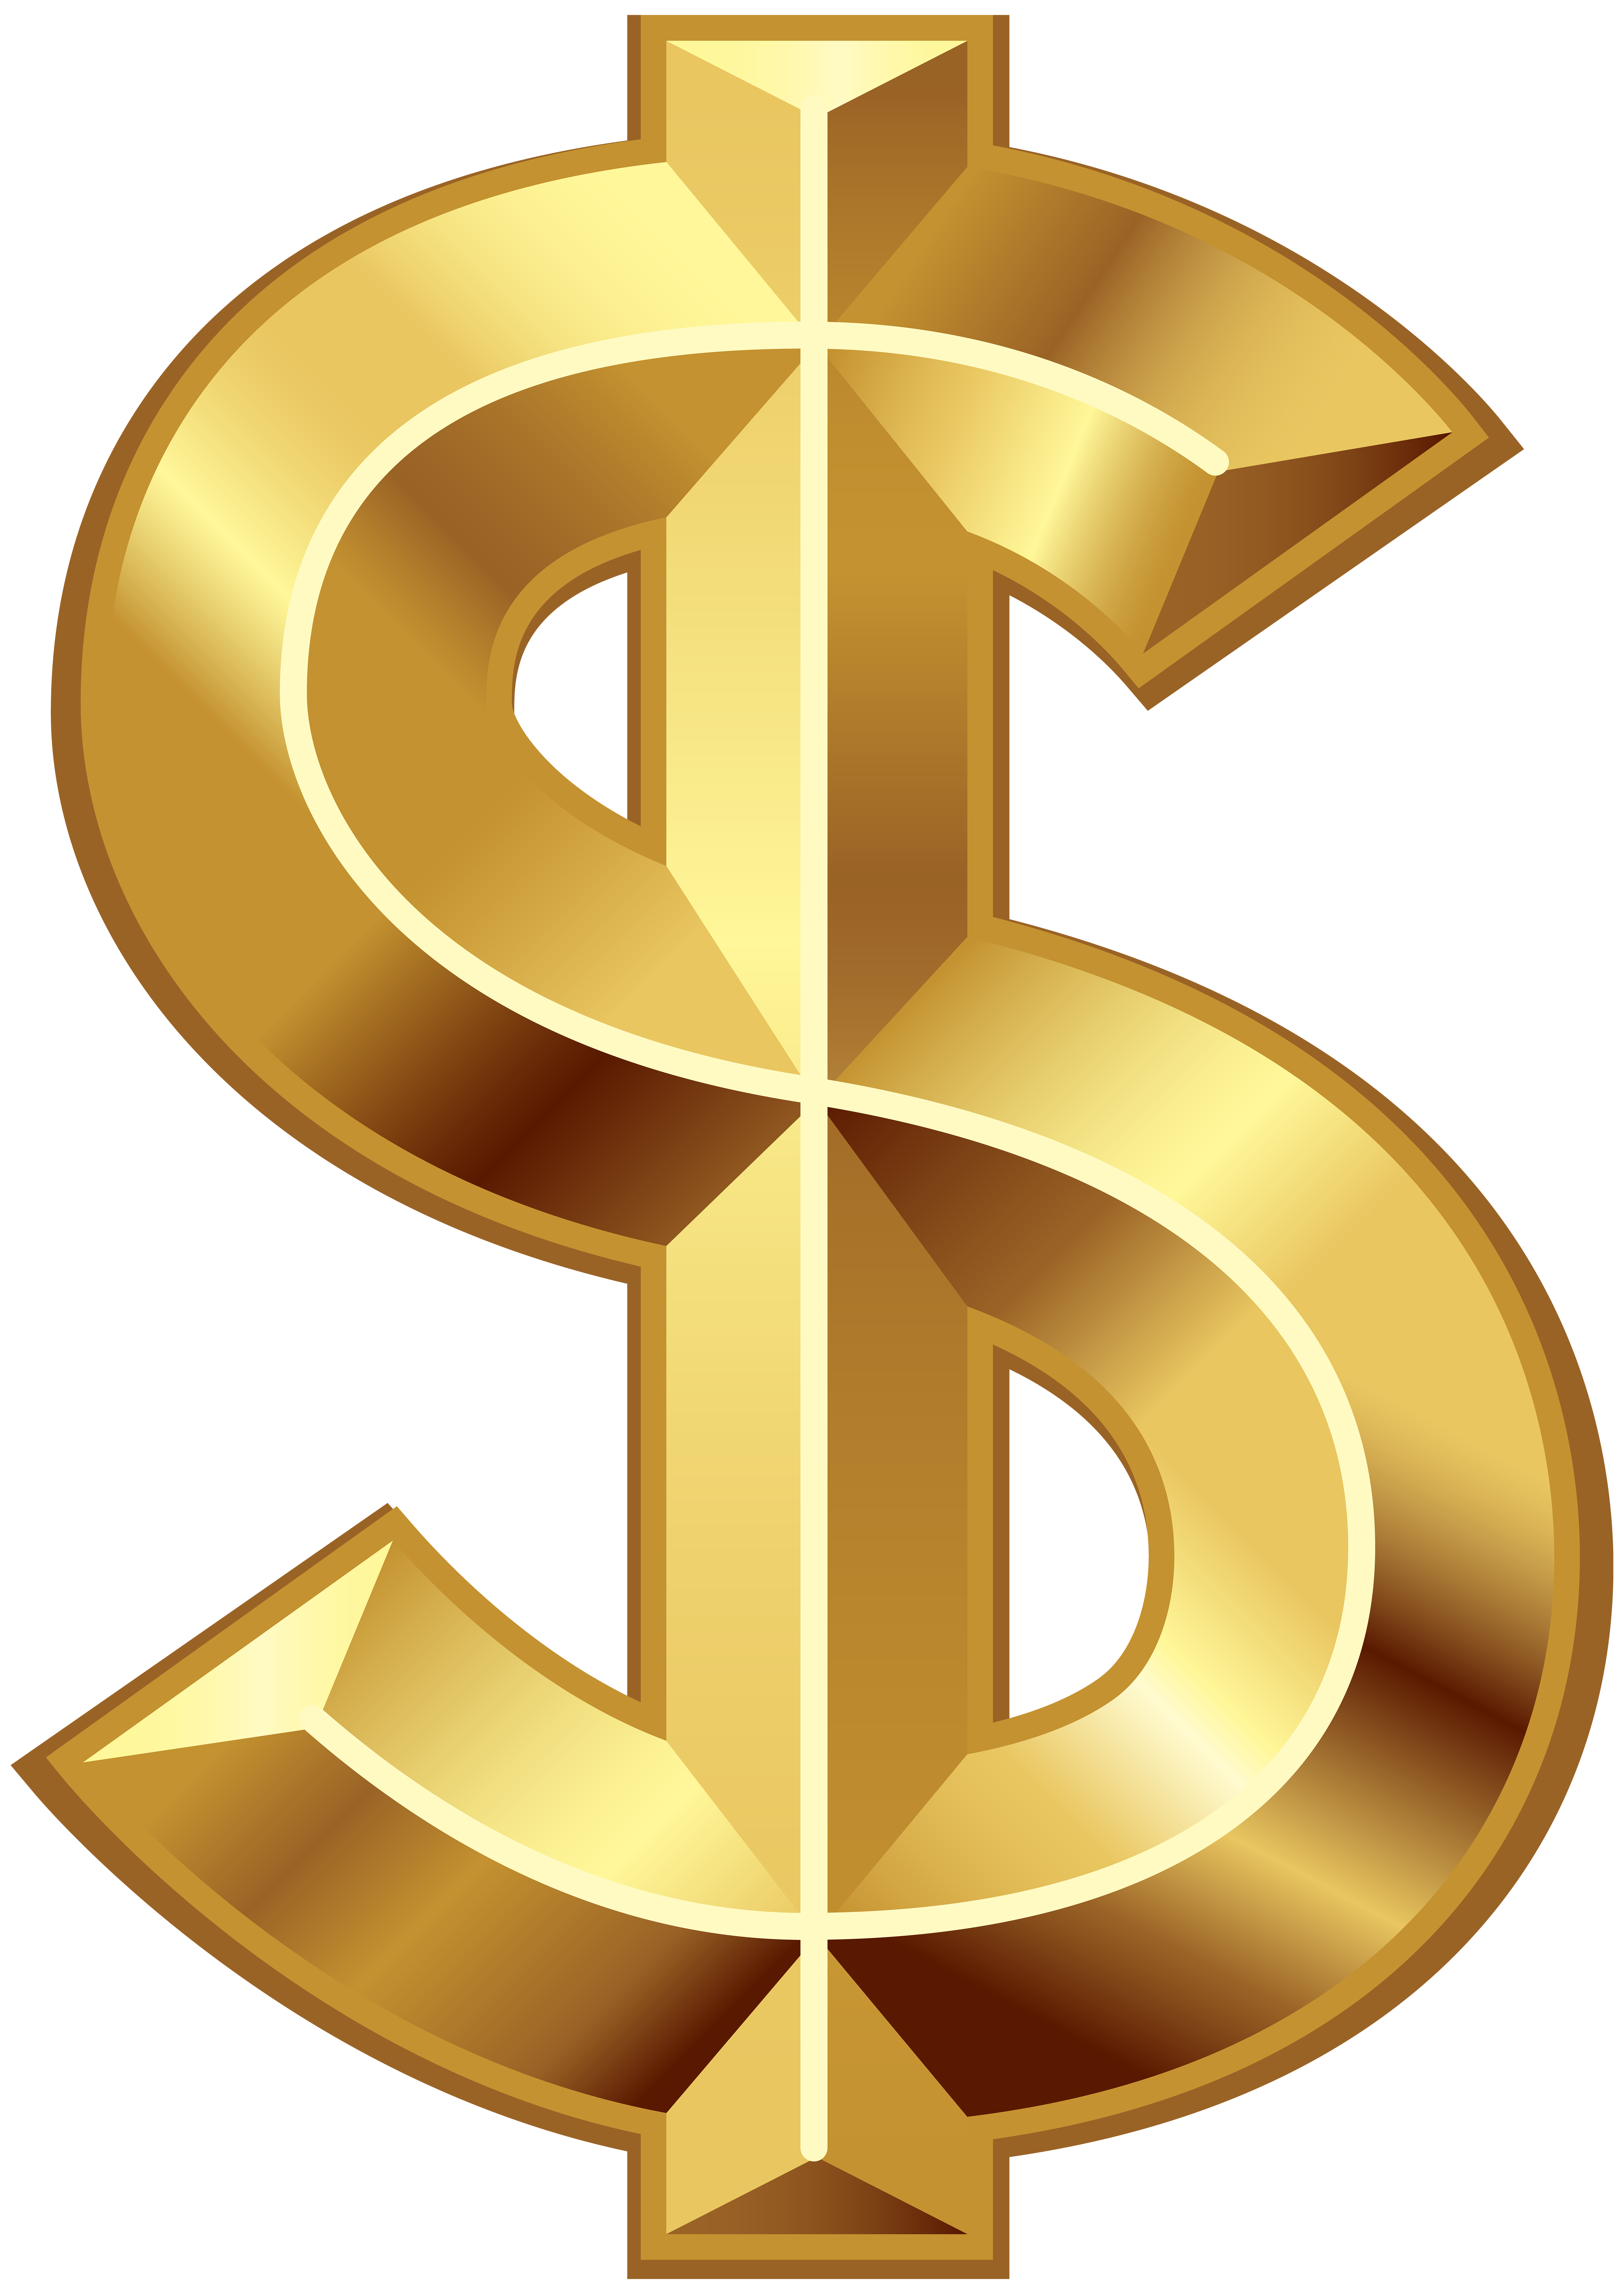 Golden United Symbol Dollar Sign States Currency PNG Image